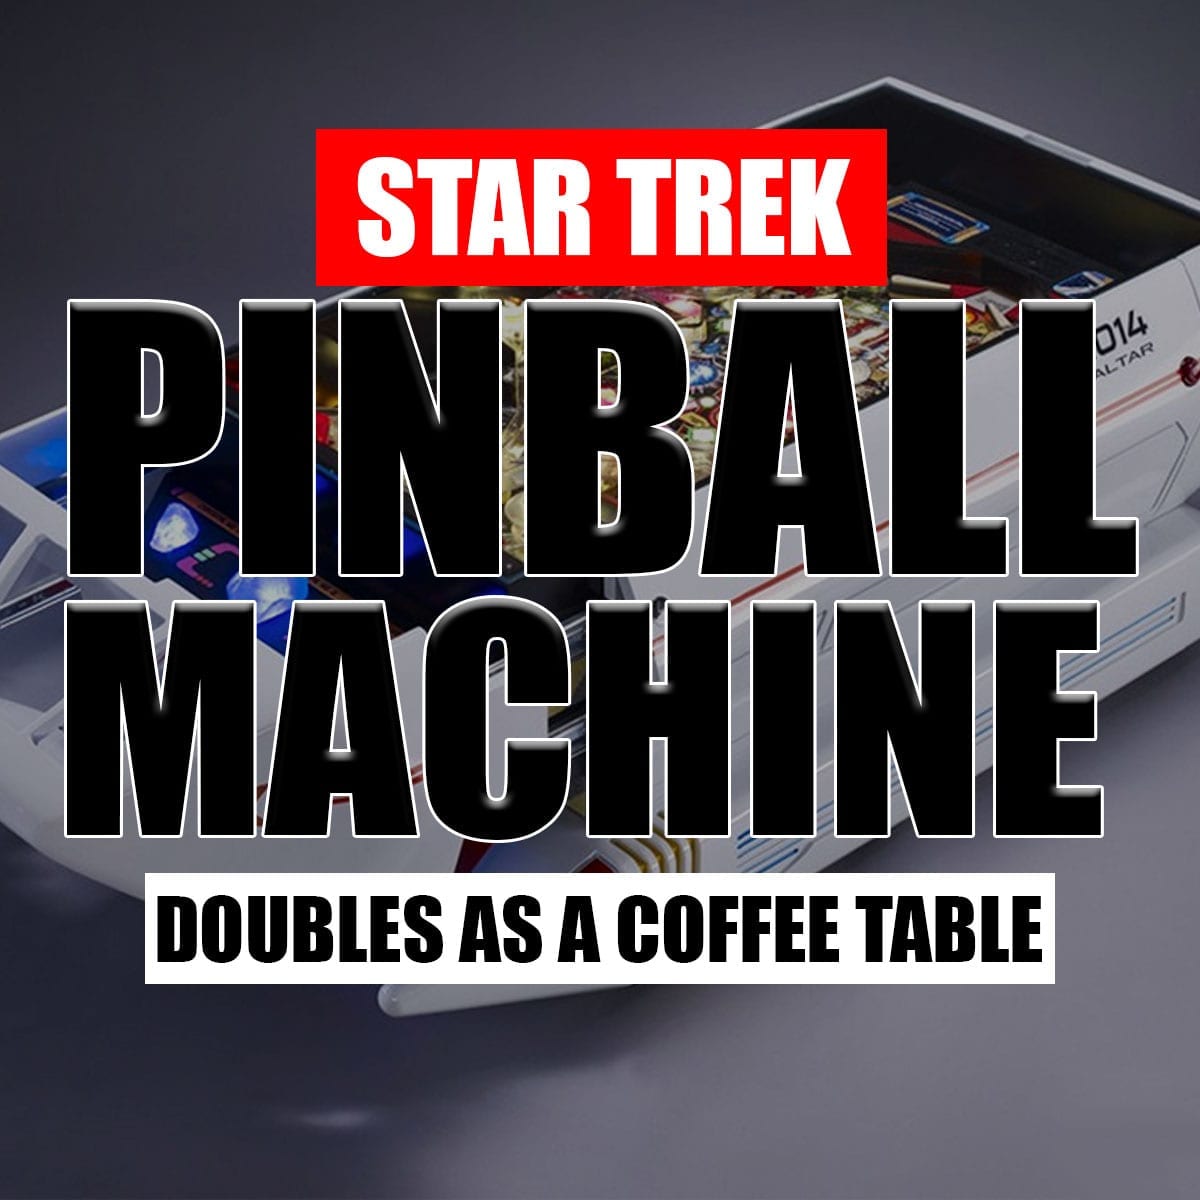 Star Trek Pinball Machine a Coffee Table